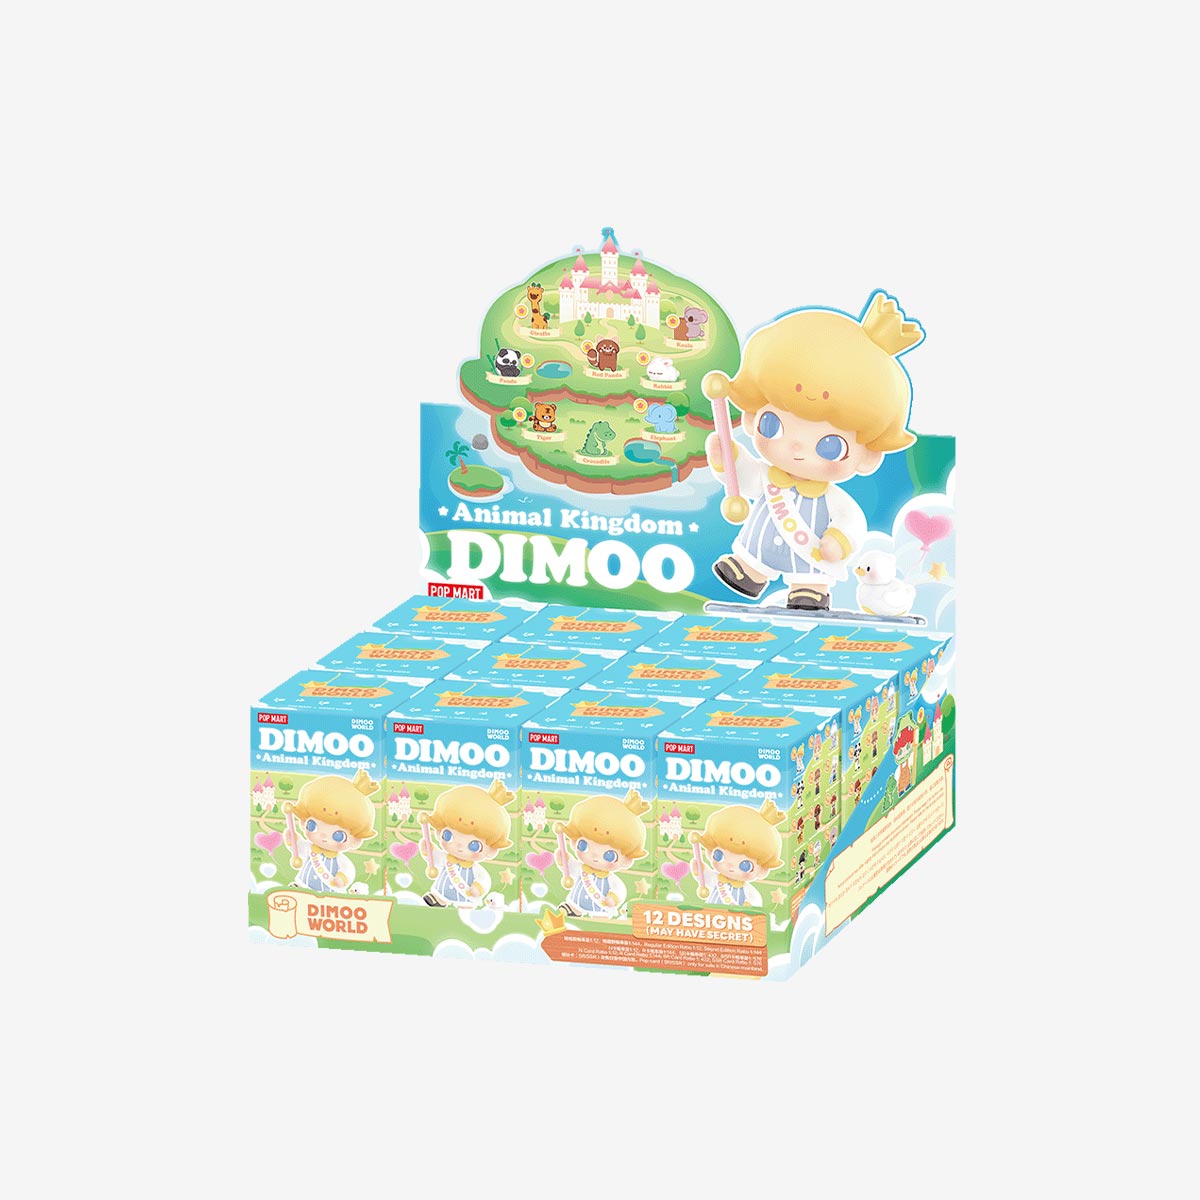 Dimoo Animal Kingdom Series Blind Box